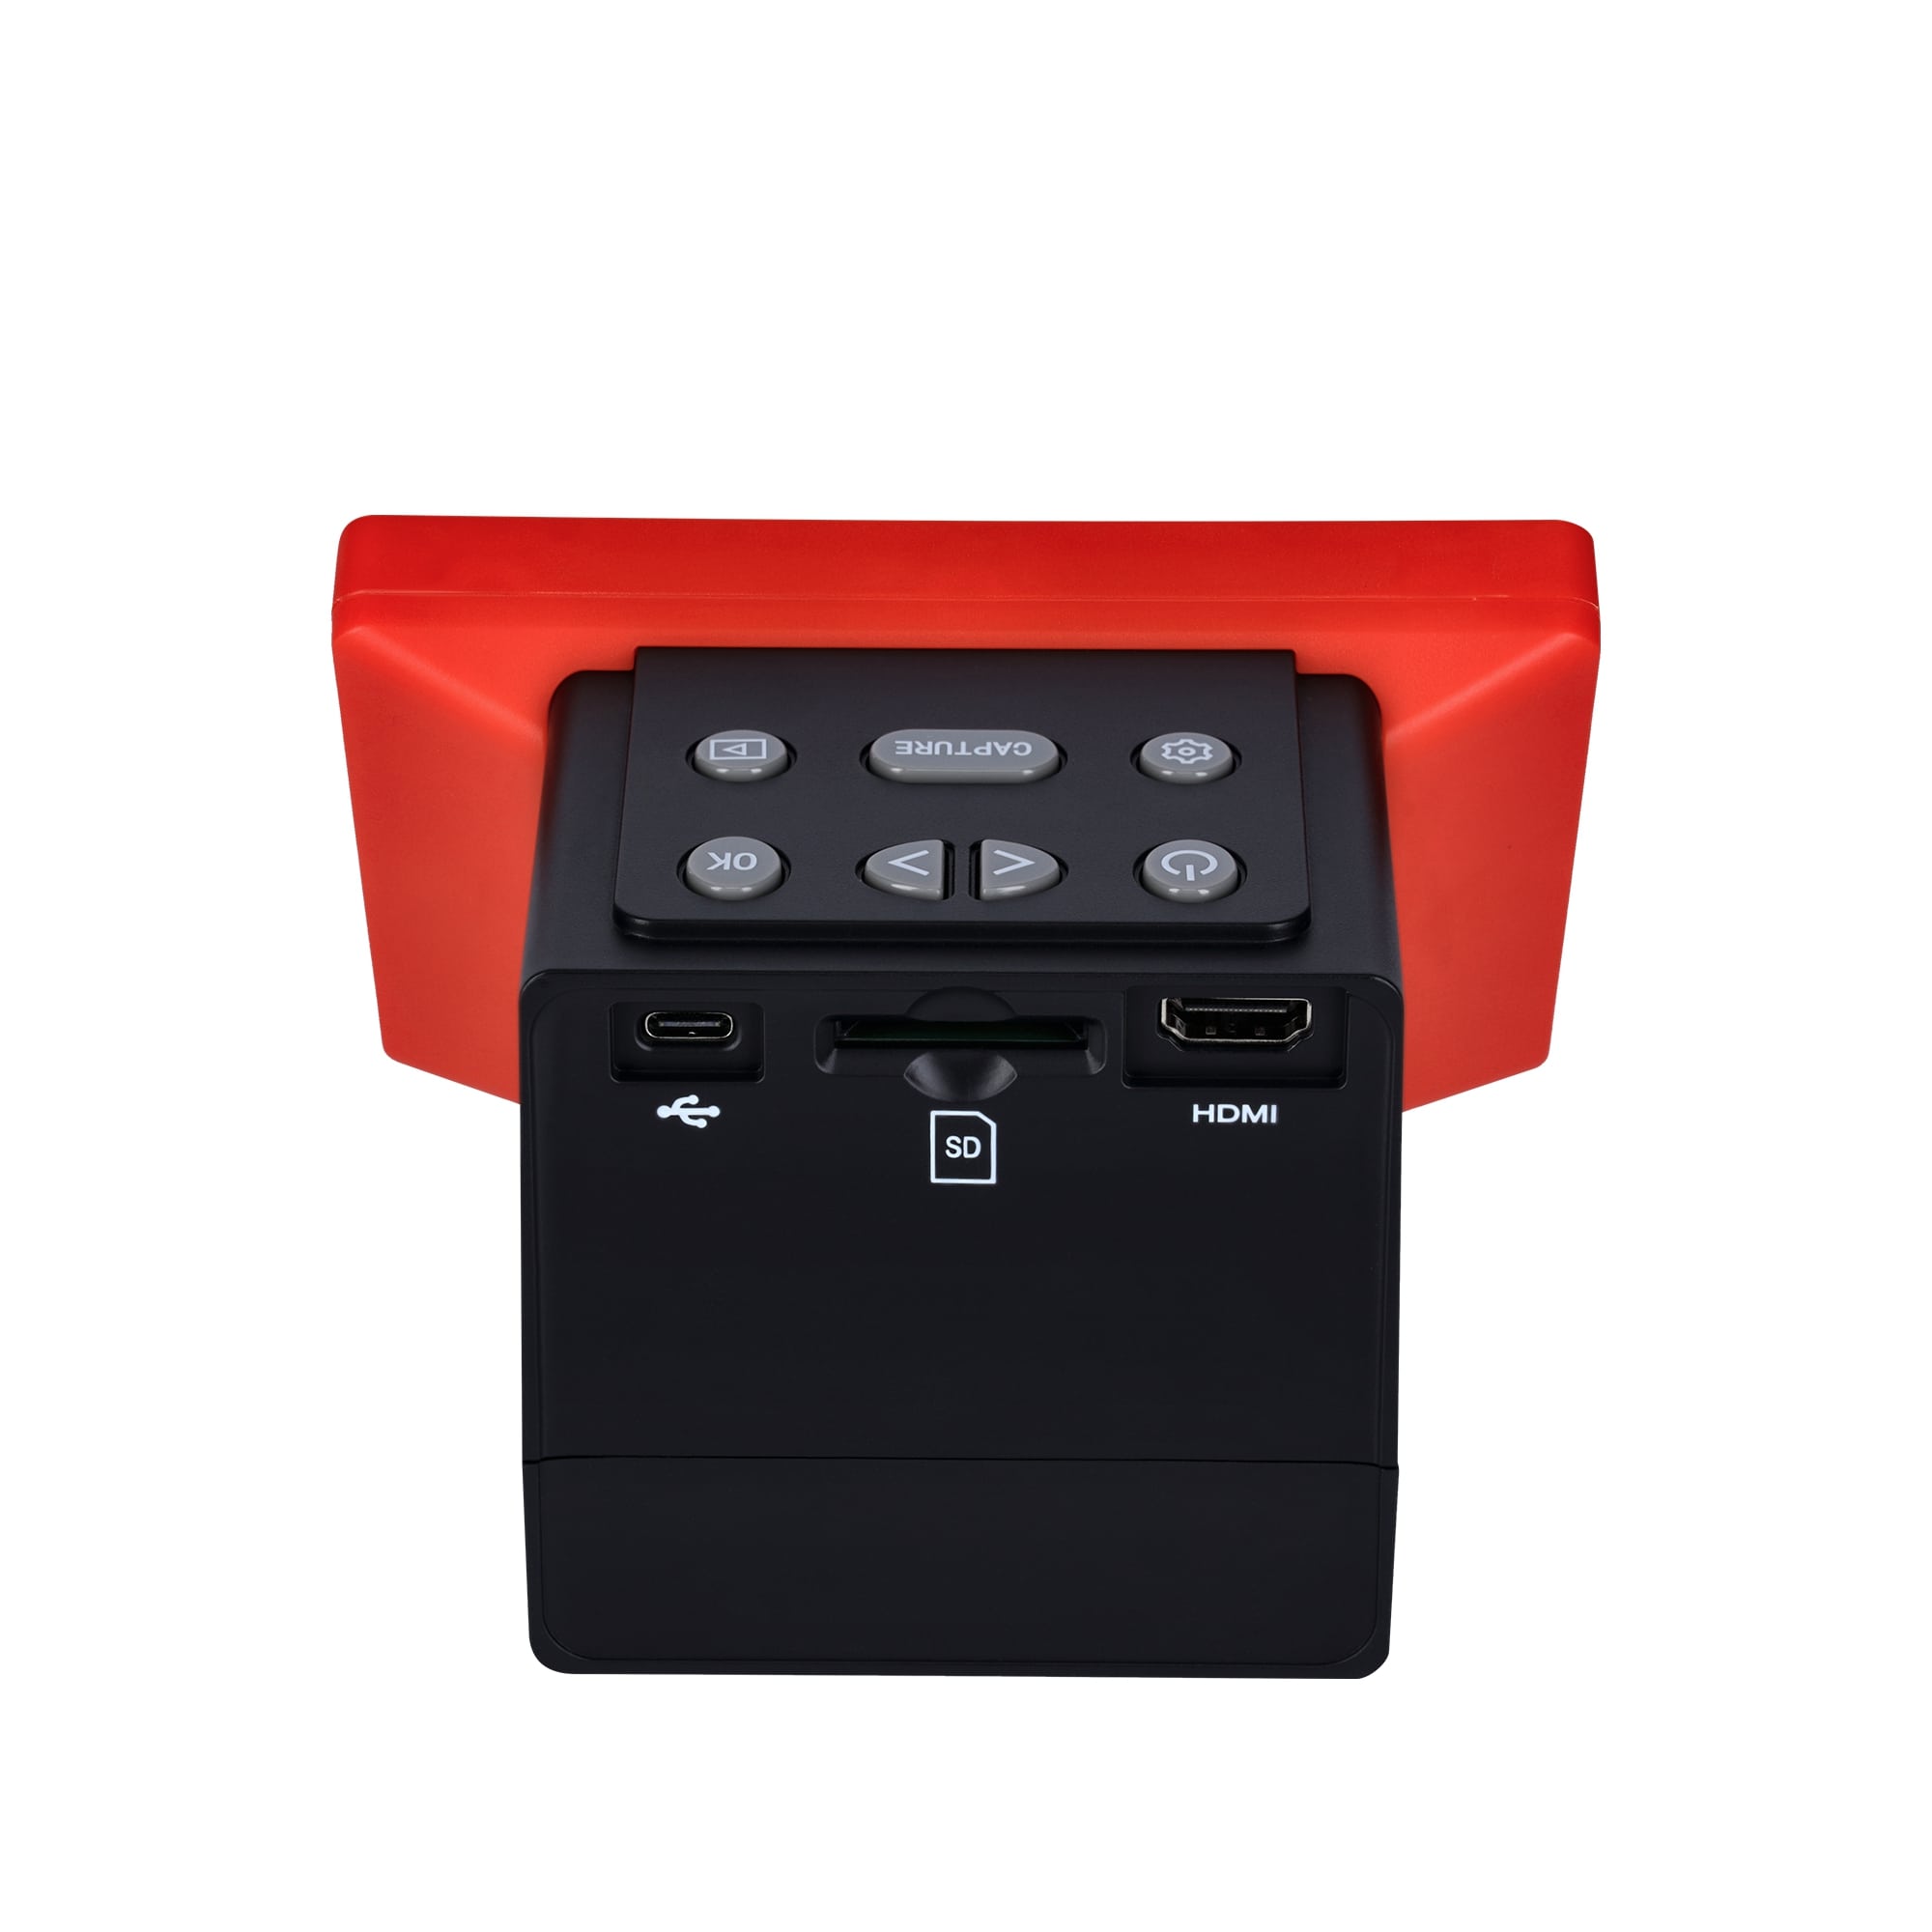 Produktabbildung Dia-Film-Scanner DF-S 1300 SE